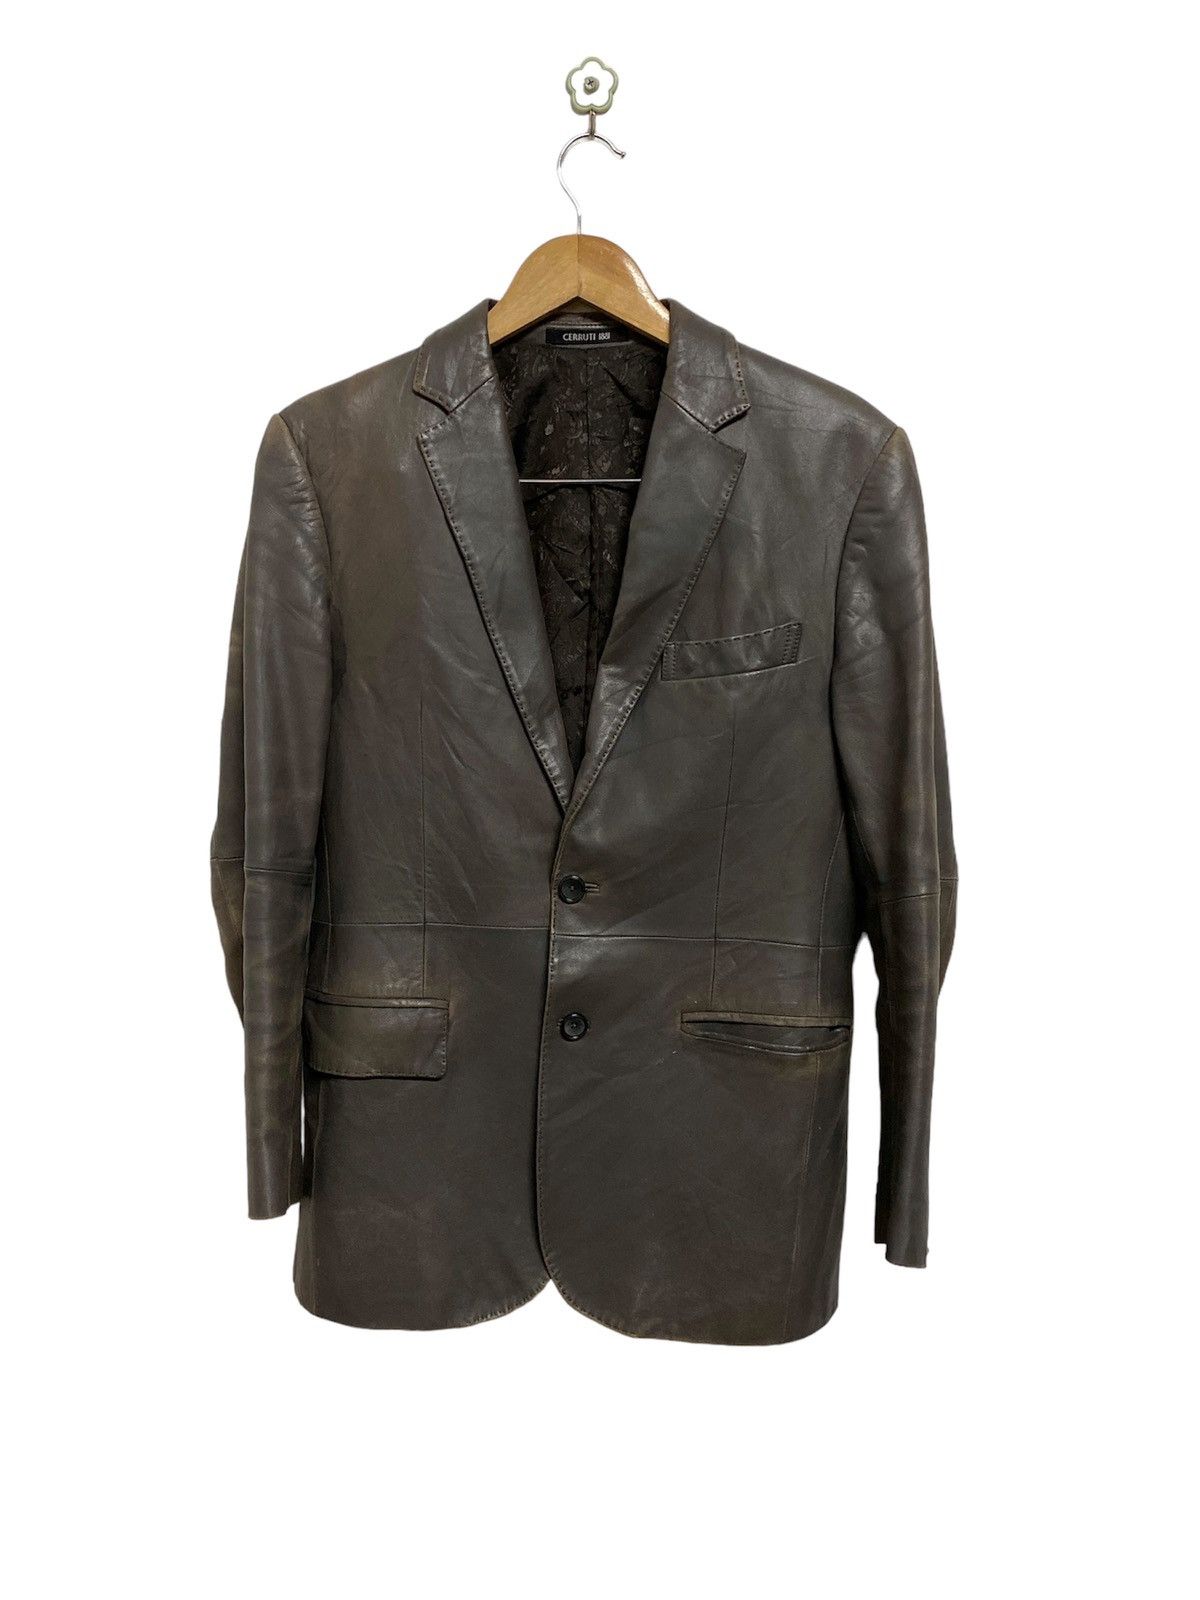 Cerruti 1881 Lambskin Leather Jacket - 1